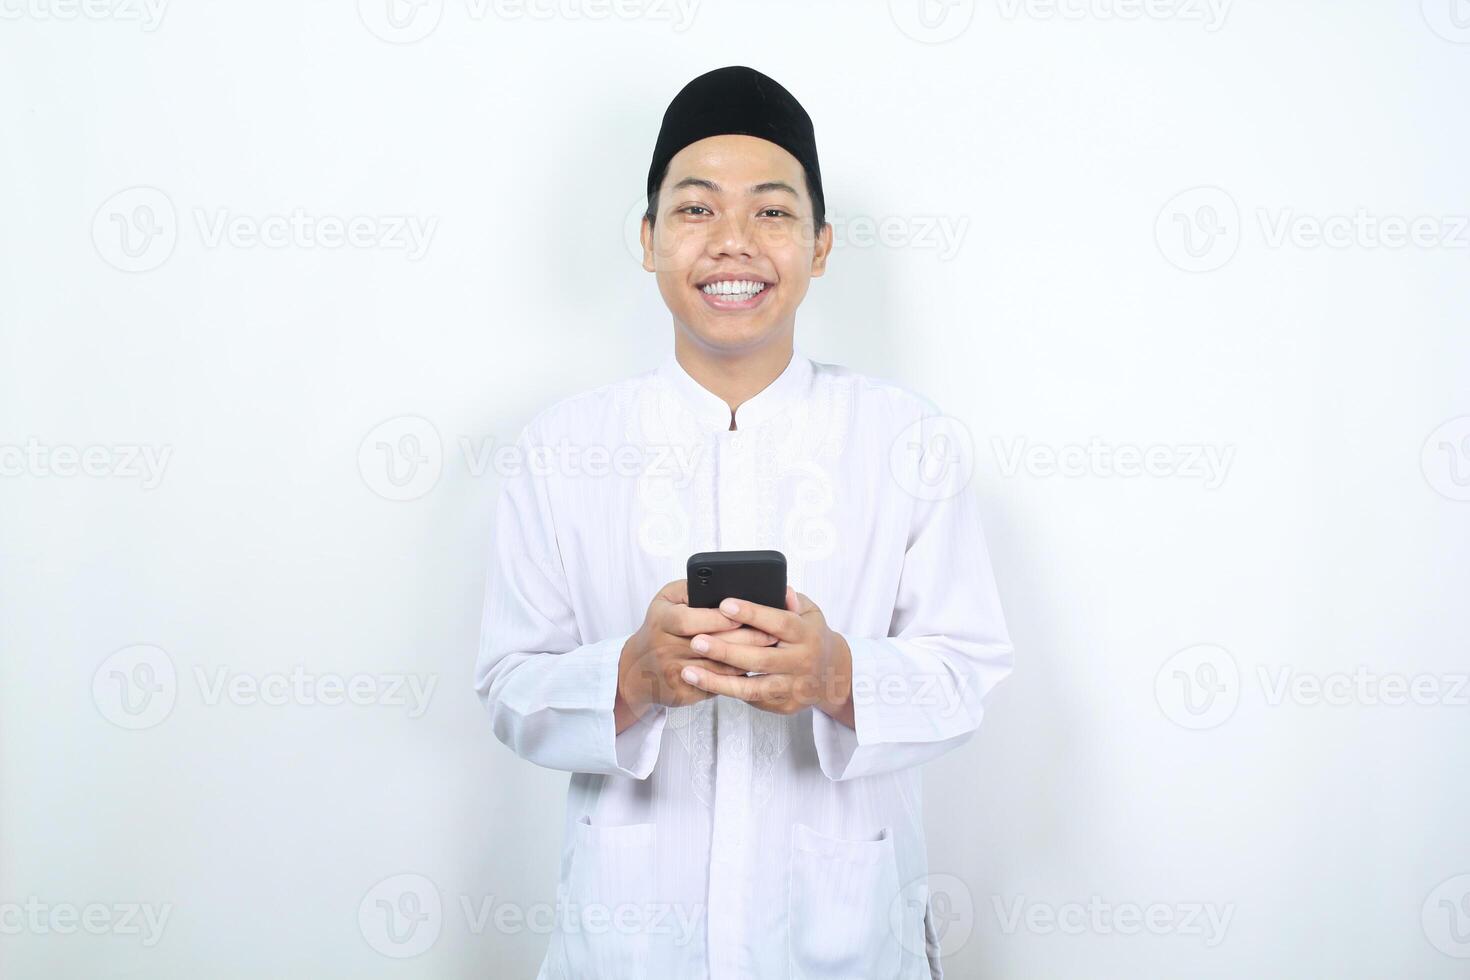 contento musulmán hombre asiático participación teléfono y mirando a cámara con sonrisa foto